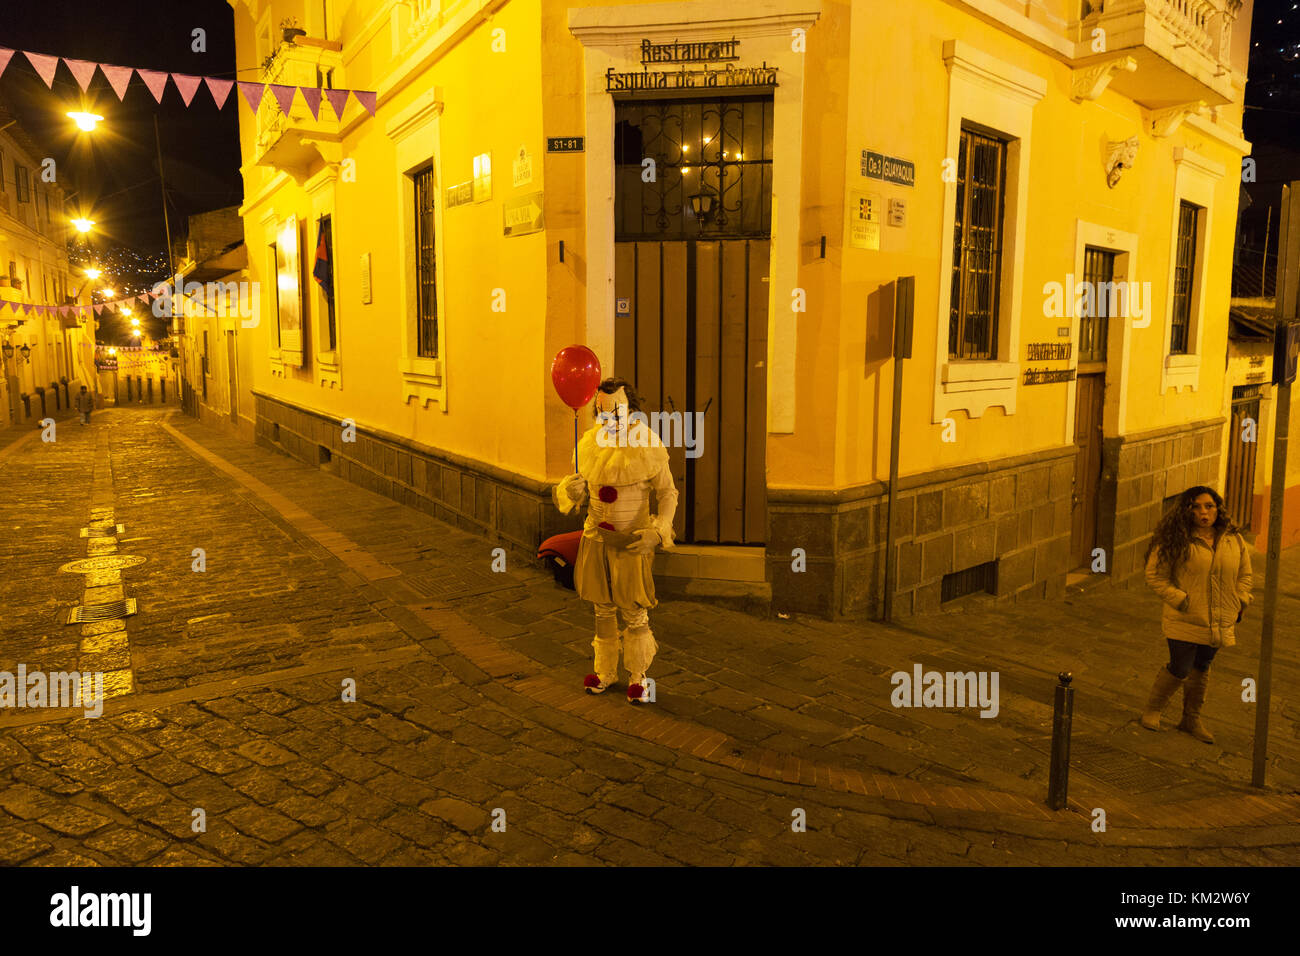 Man dressed as a clown at night, La Ronda, old town, Quito Ecuador, South America street scene Stock Photo